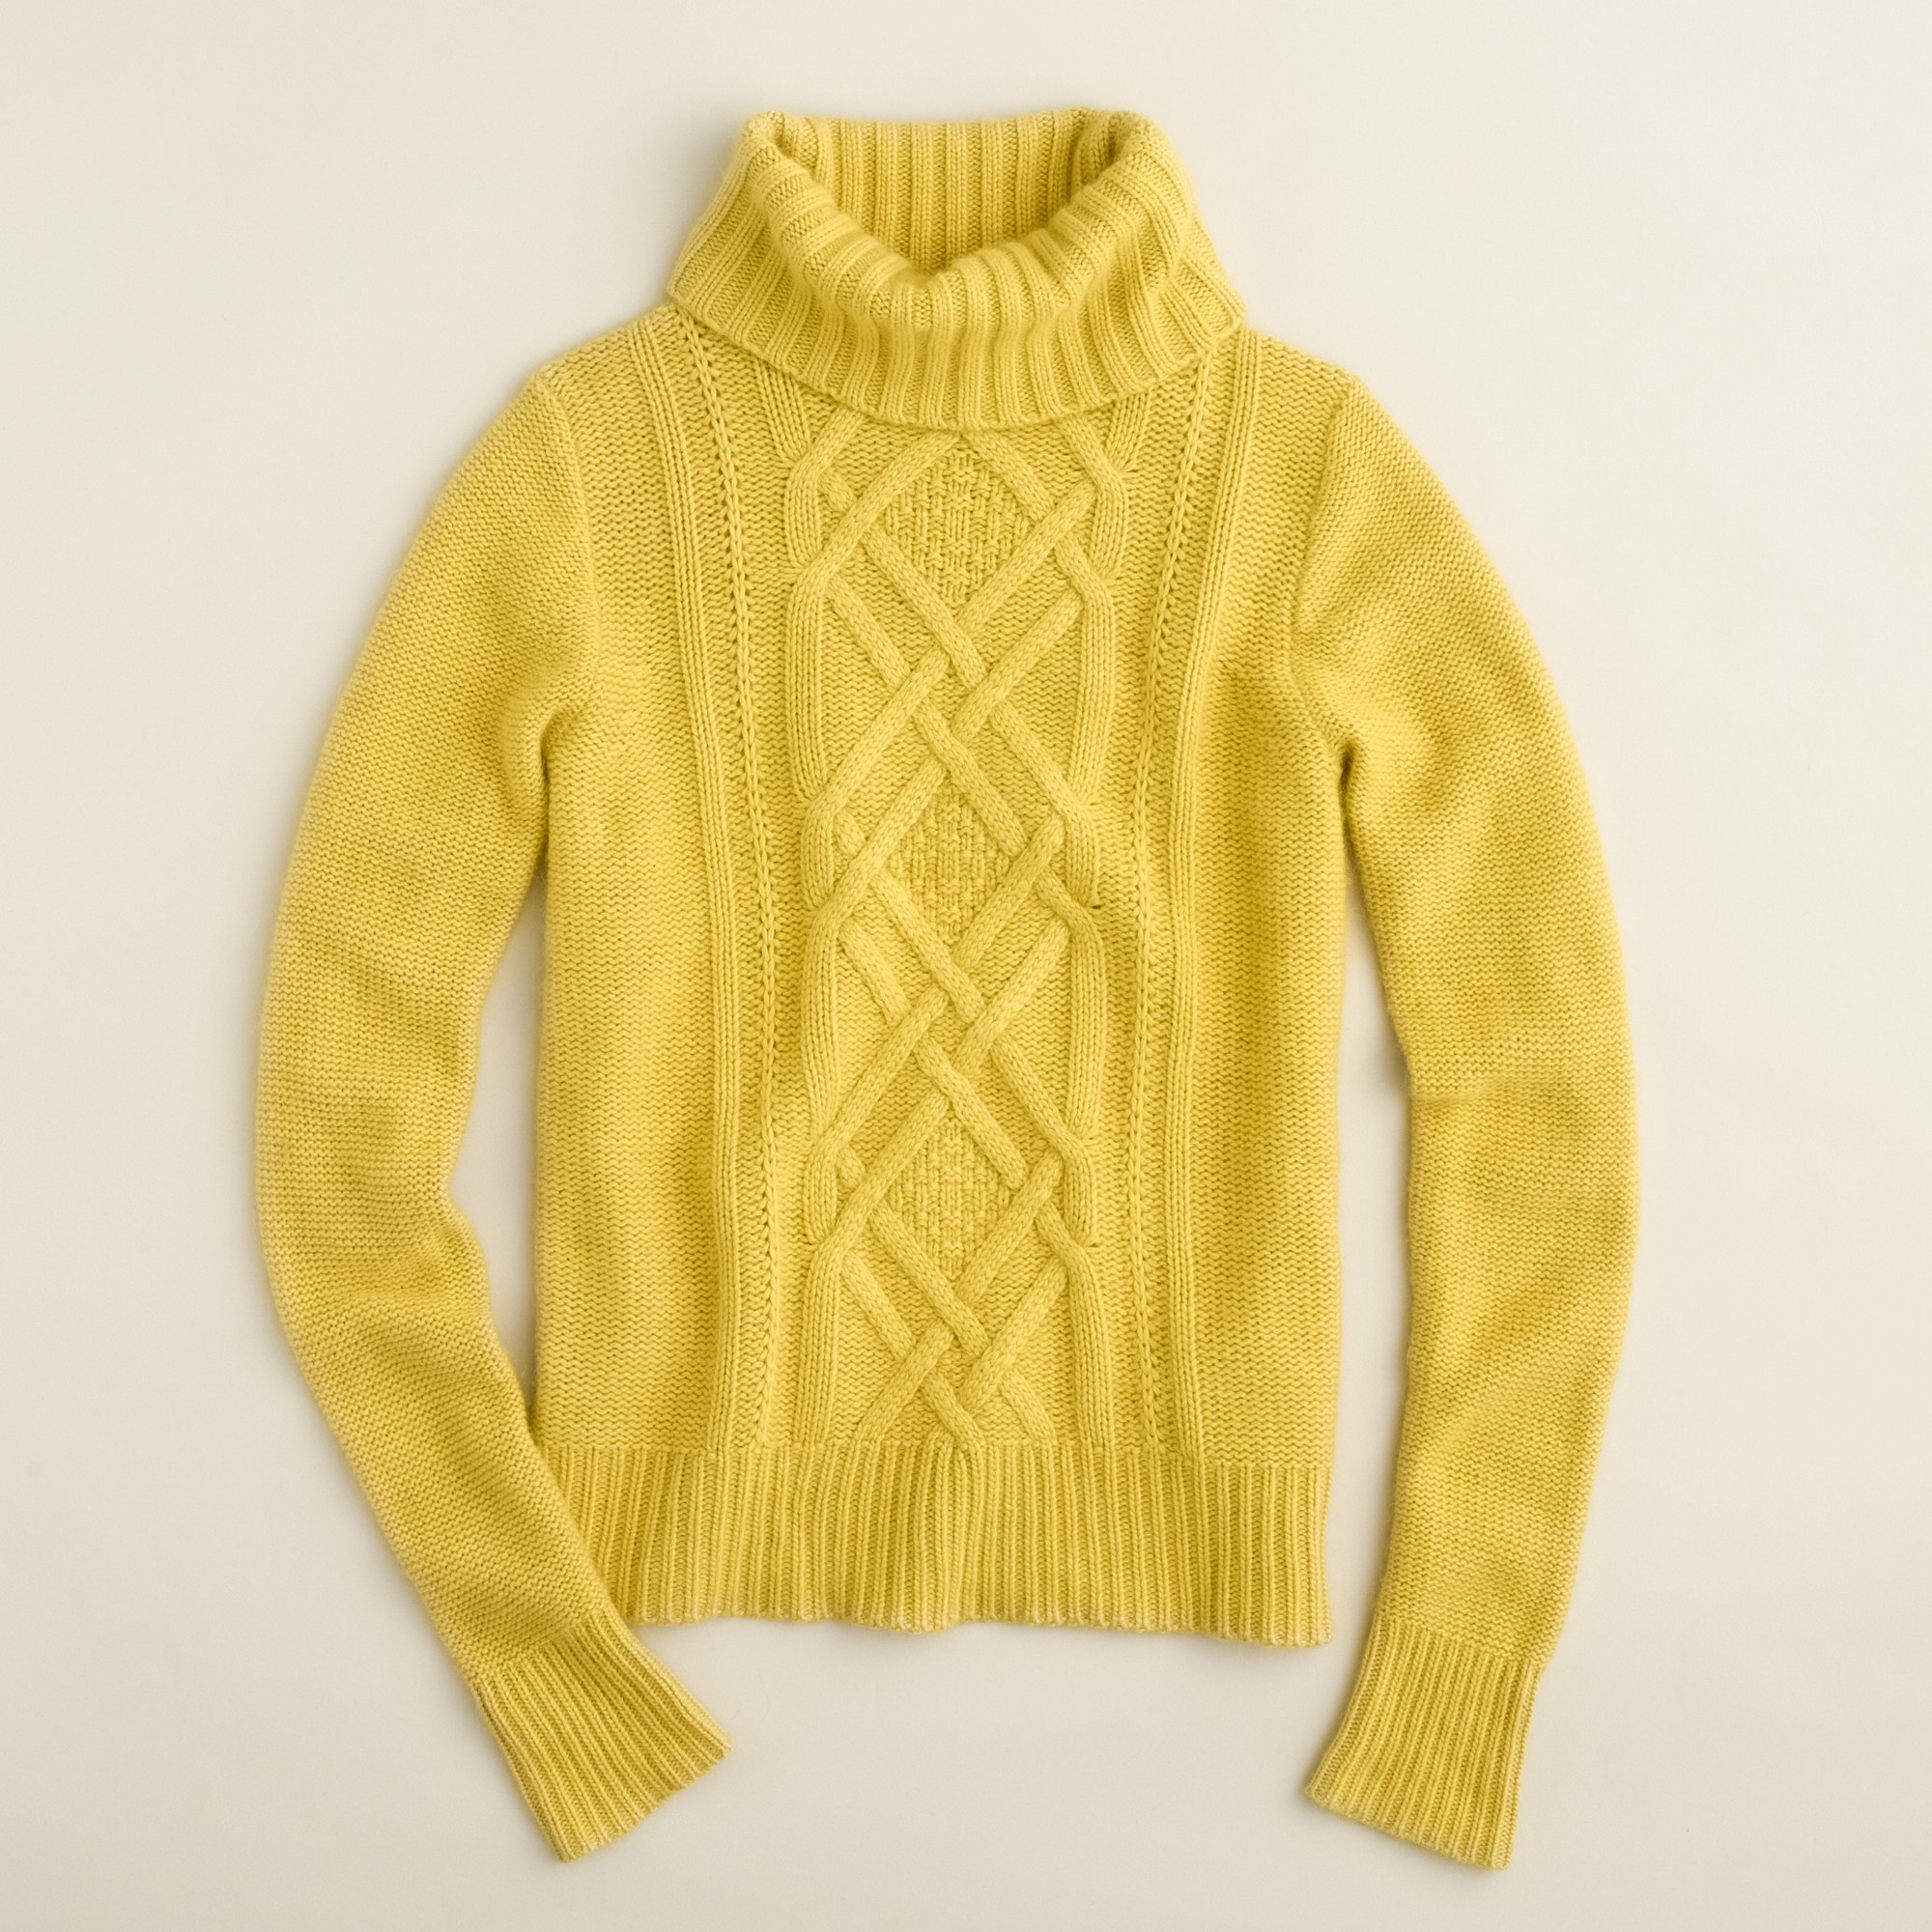 J.crew Cambridge Cable Turtleneck Sweater in Yellow | Lyst